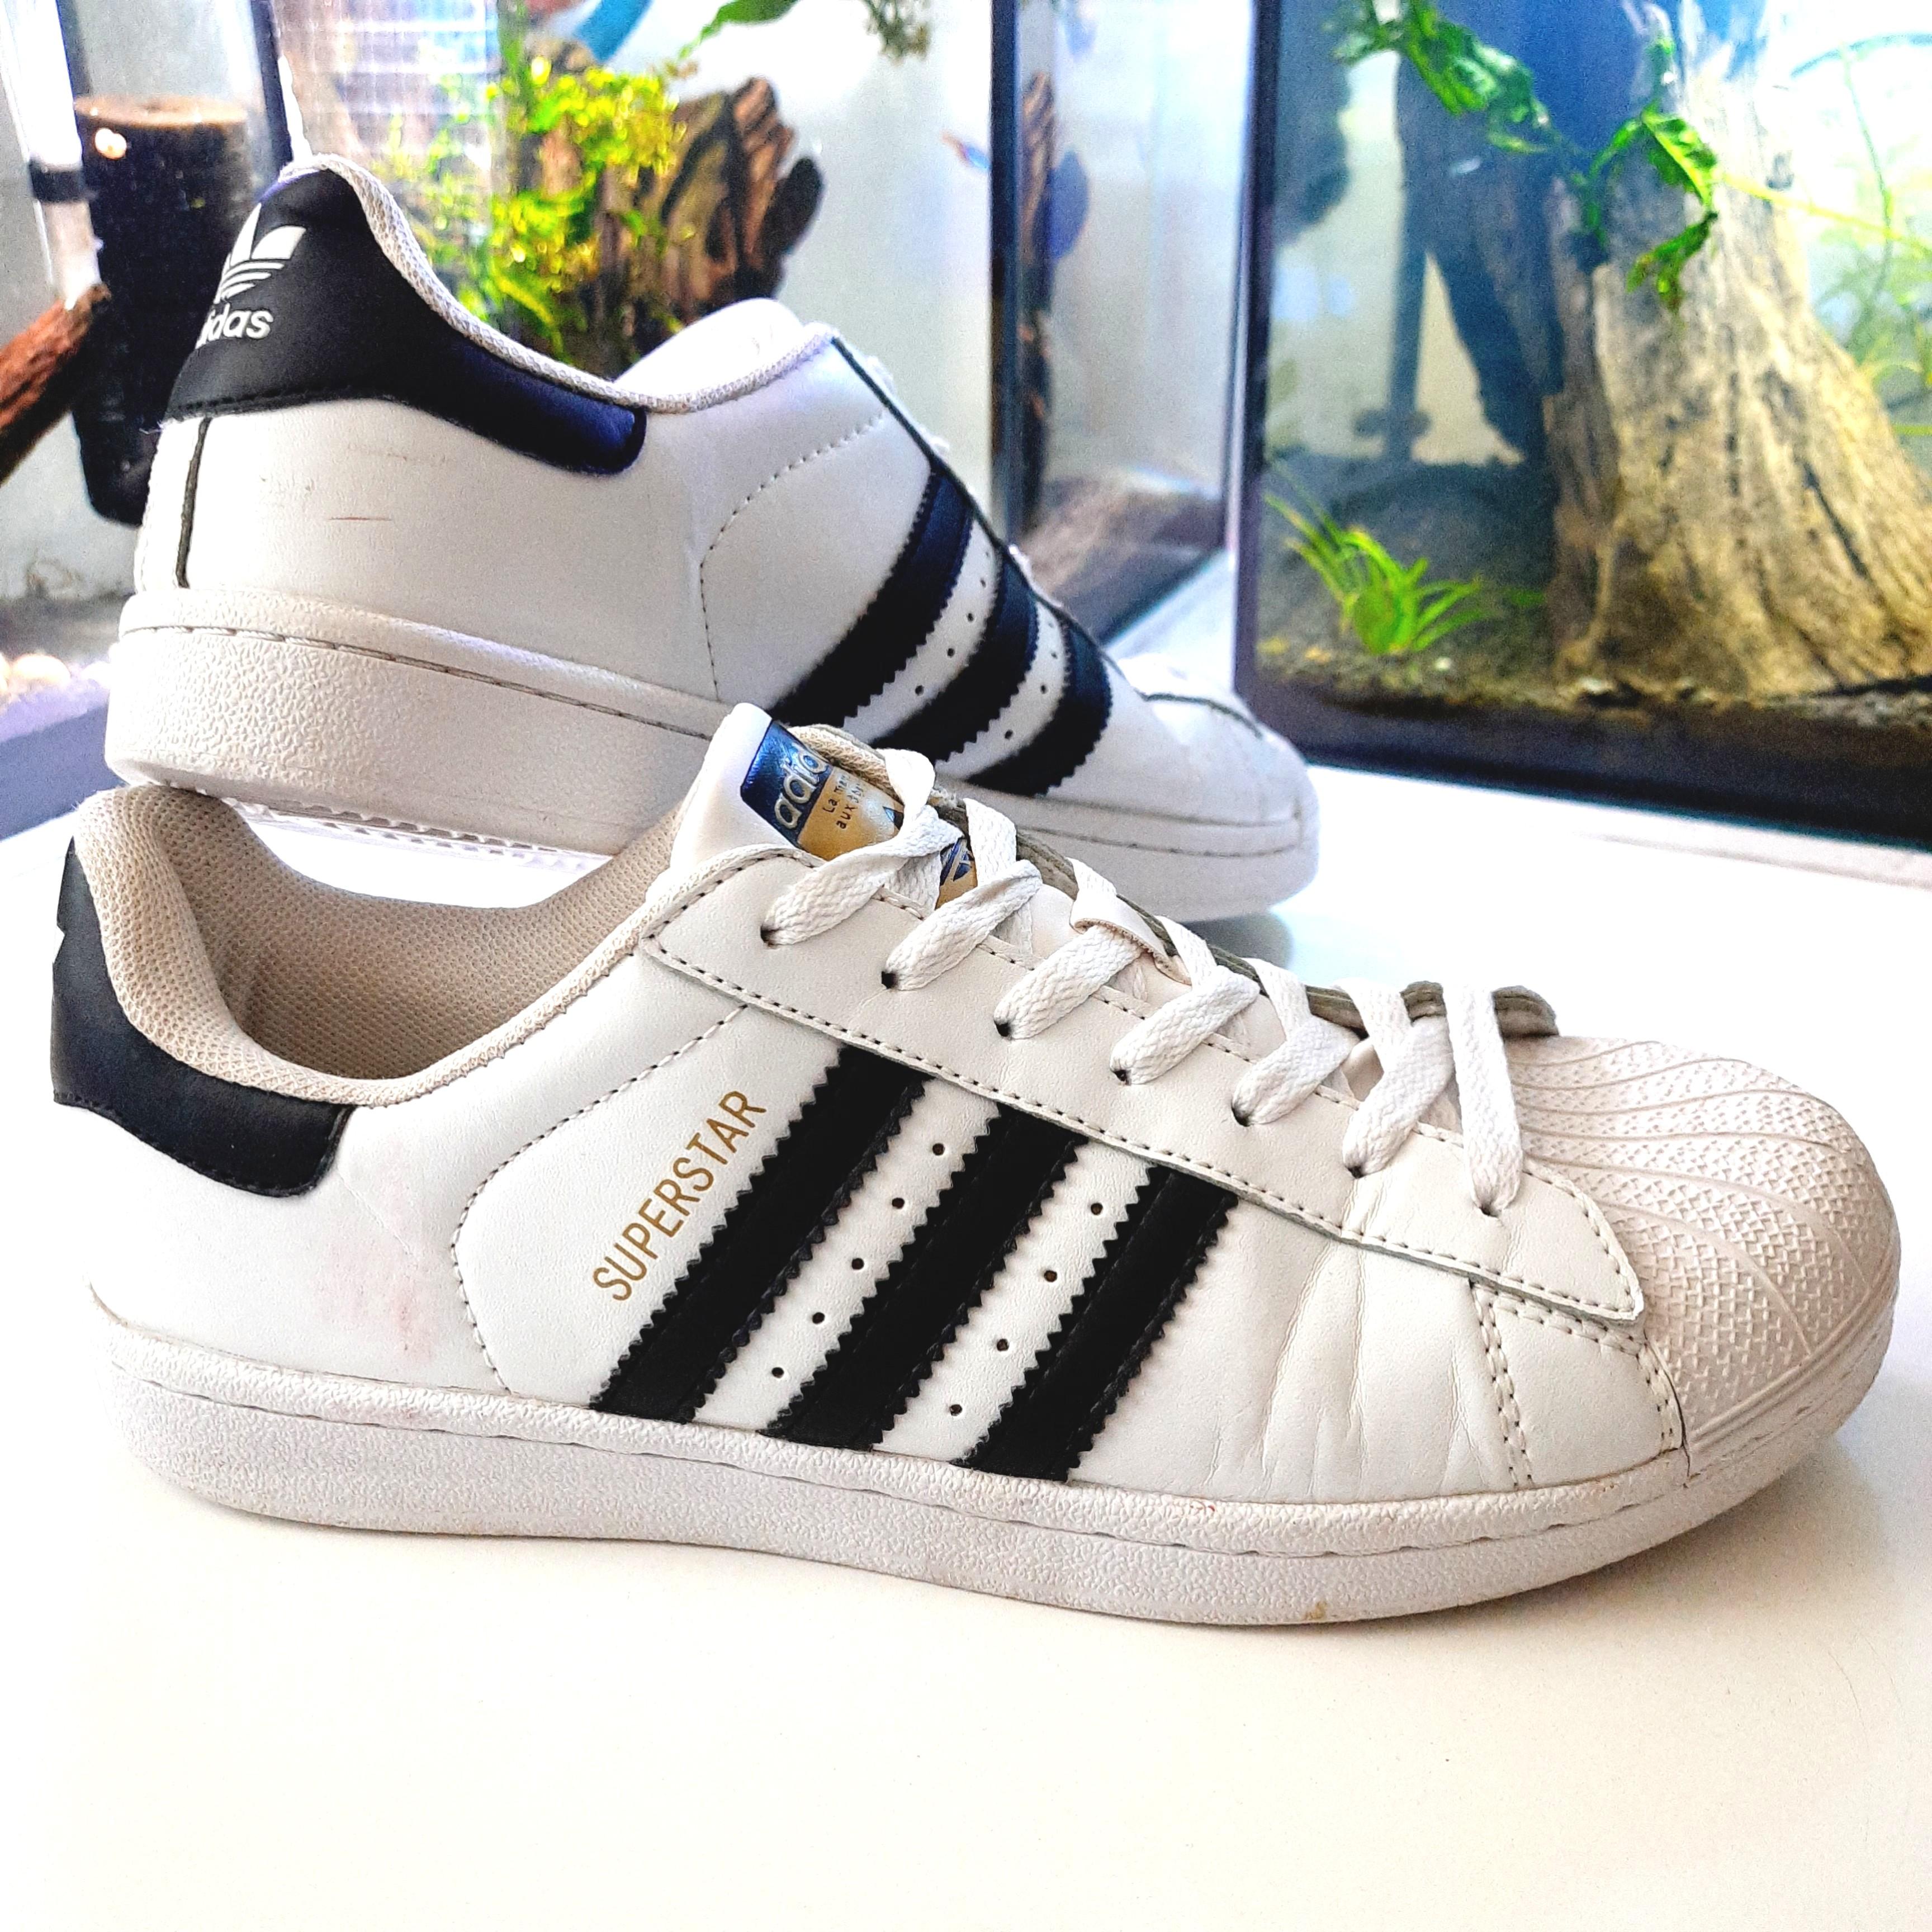 Adidas Superstar size 7.5UK, Men's Fashion, Footwear, Sneakers Carousell